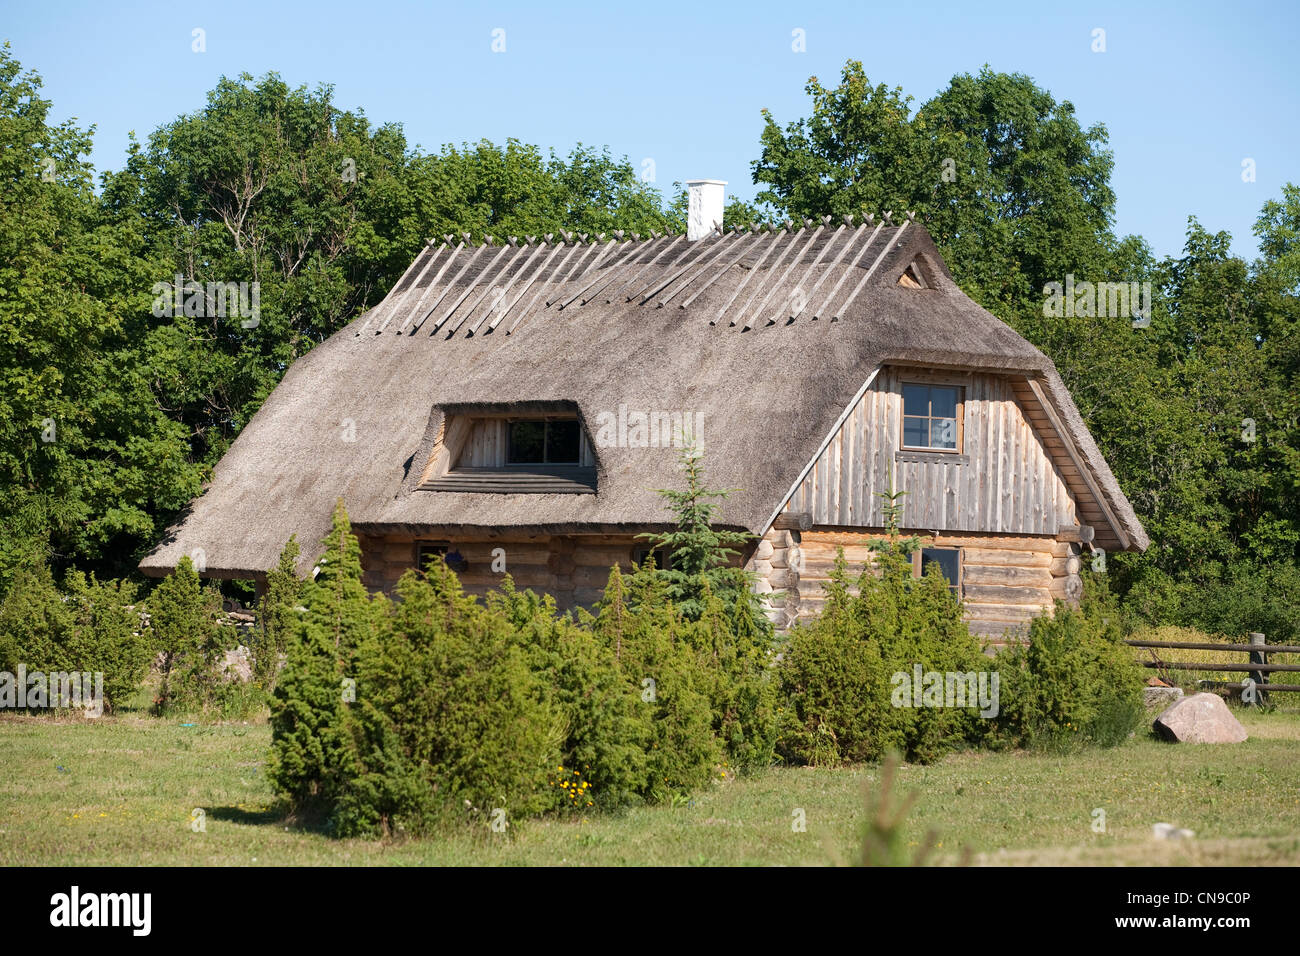 Estonia (Baltic States), Hiiu Region, Hiiumaa Island, traditional house with thatched roof Stock Photo